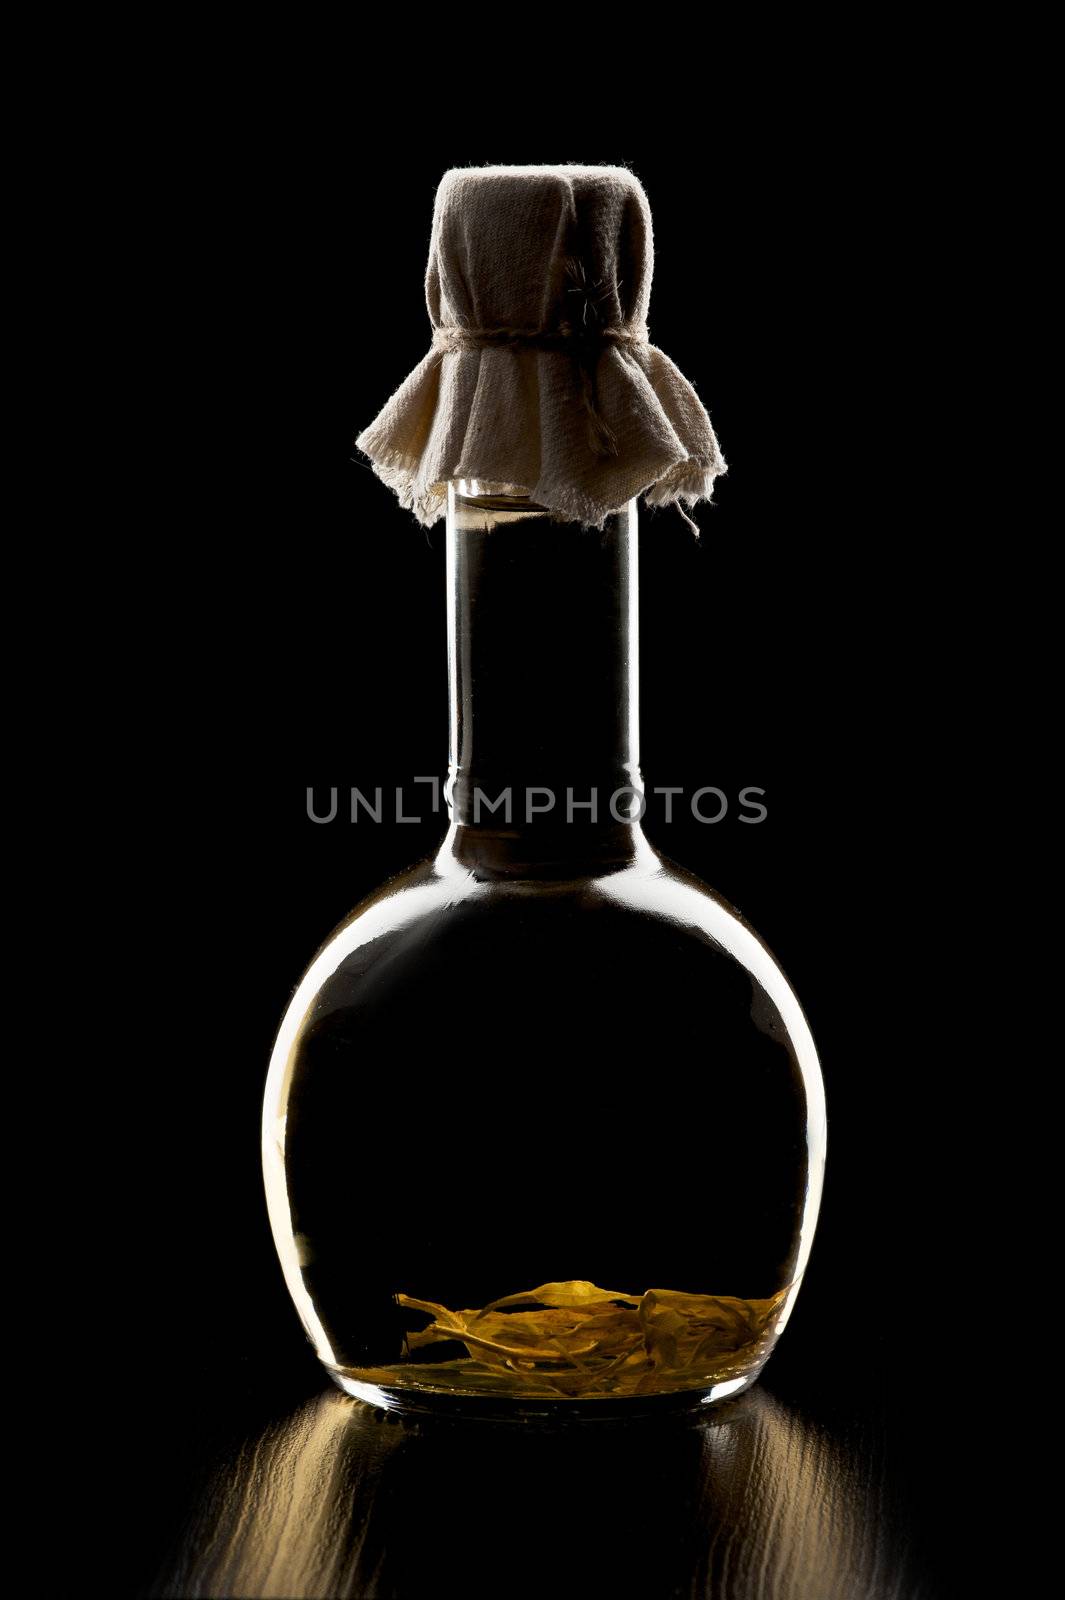 Bottle of vegetable oil in a dark tone